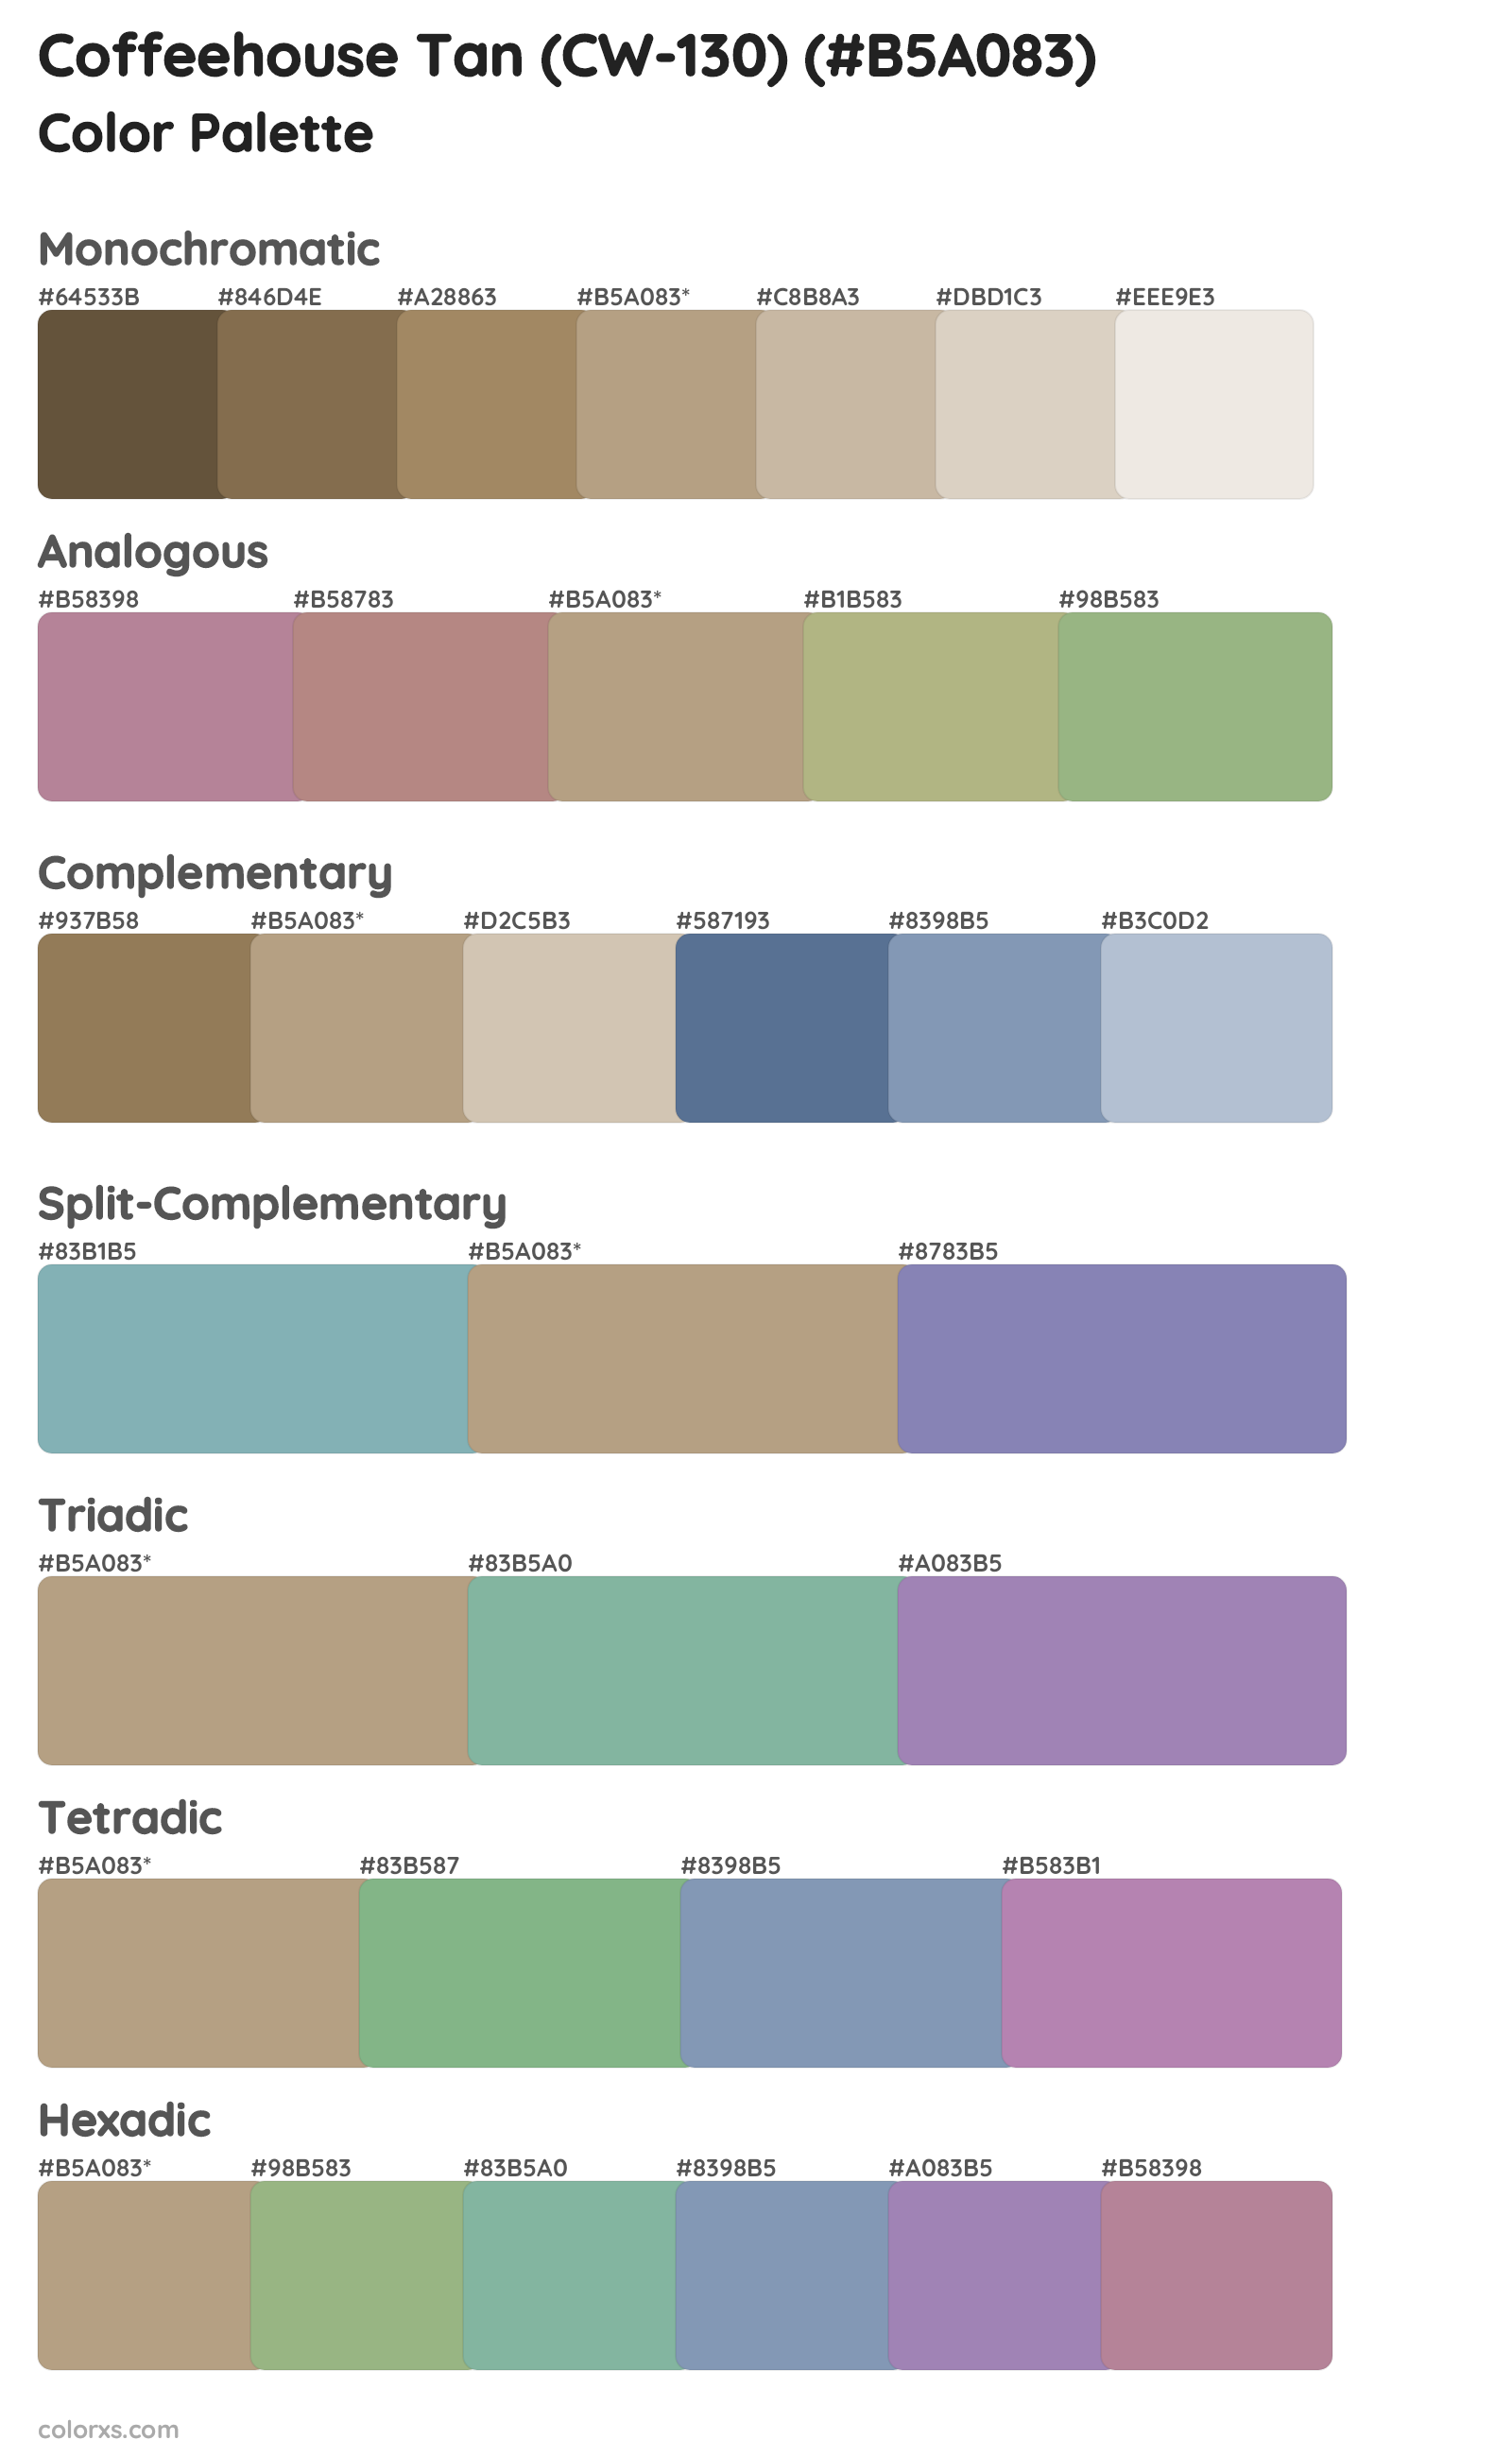 Coffeehouse Tan (CW-130) Color Scheme Palettes